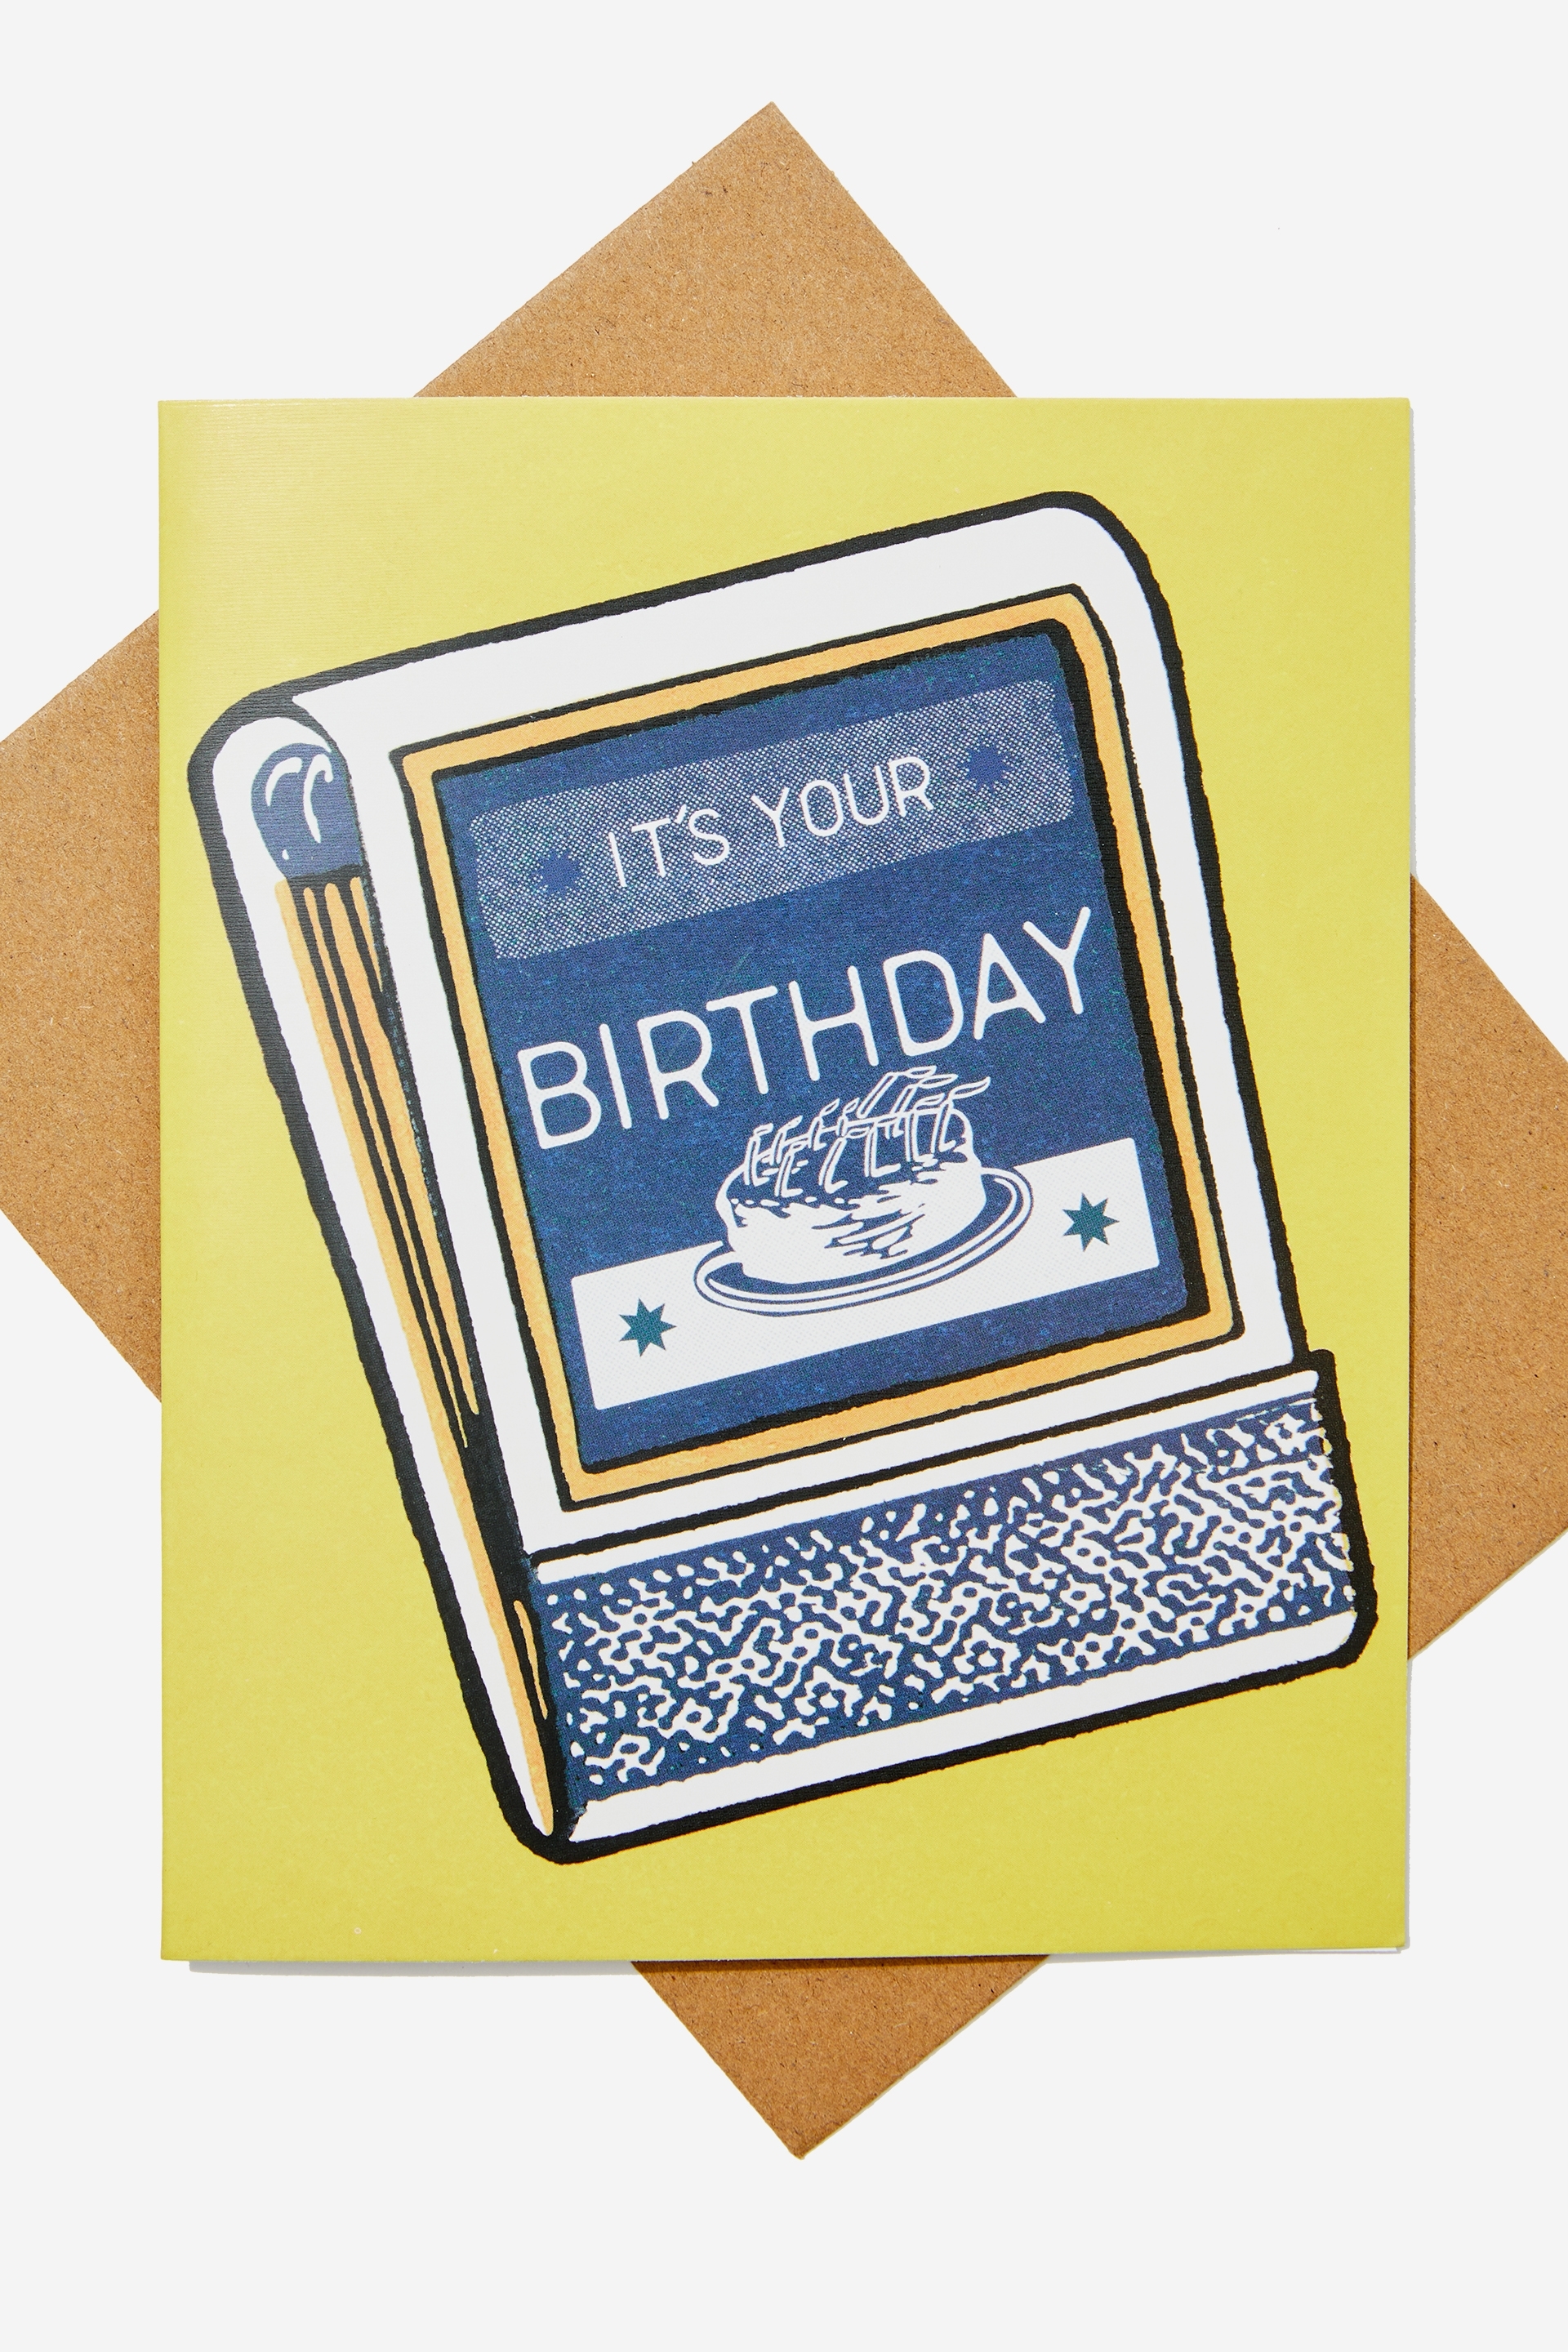 Typo - Premium Nice Birthday Card - It’s your birthday fire up pop up